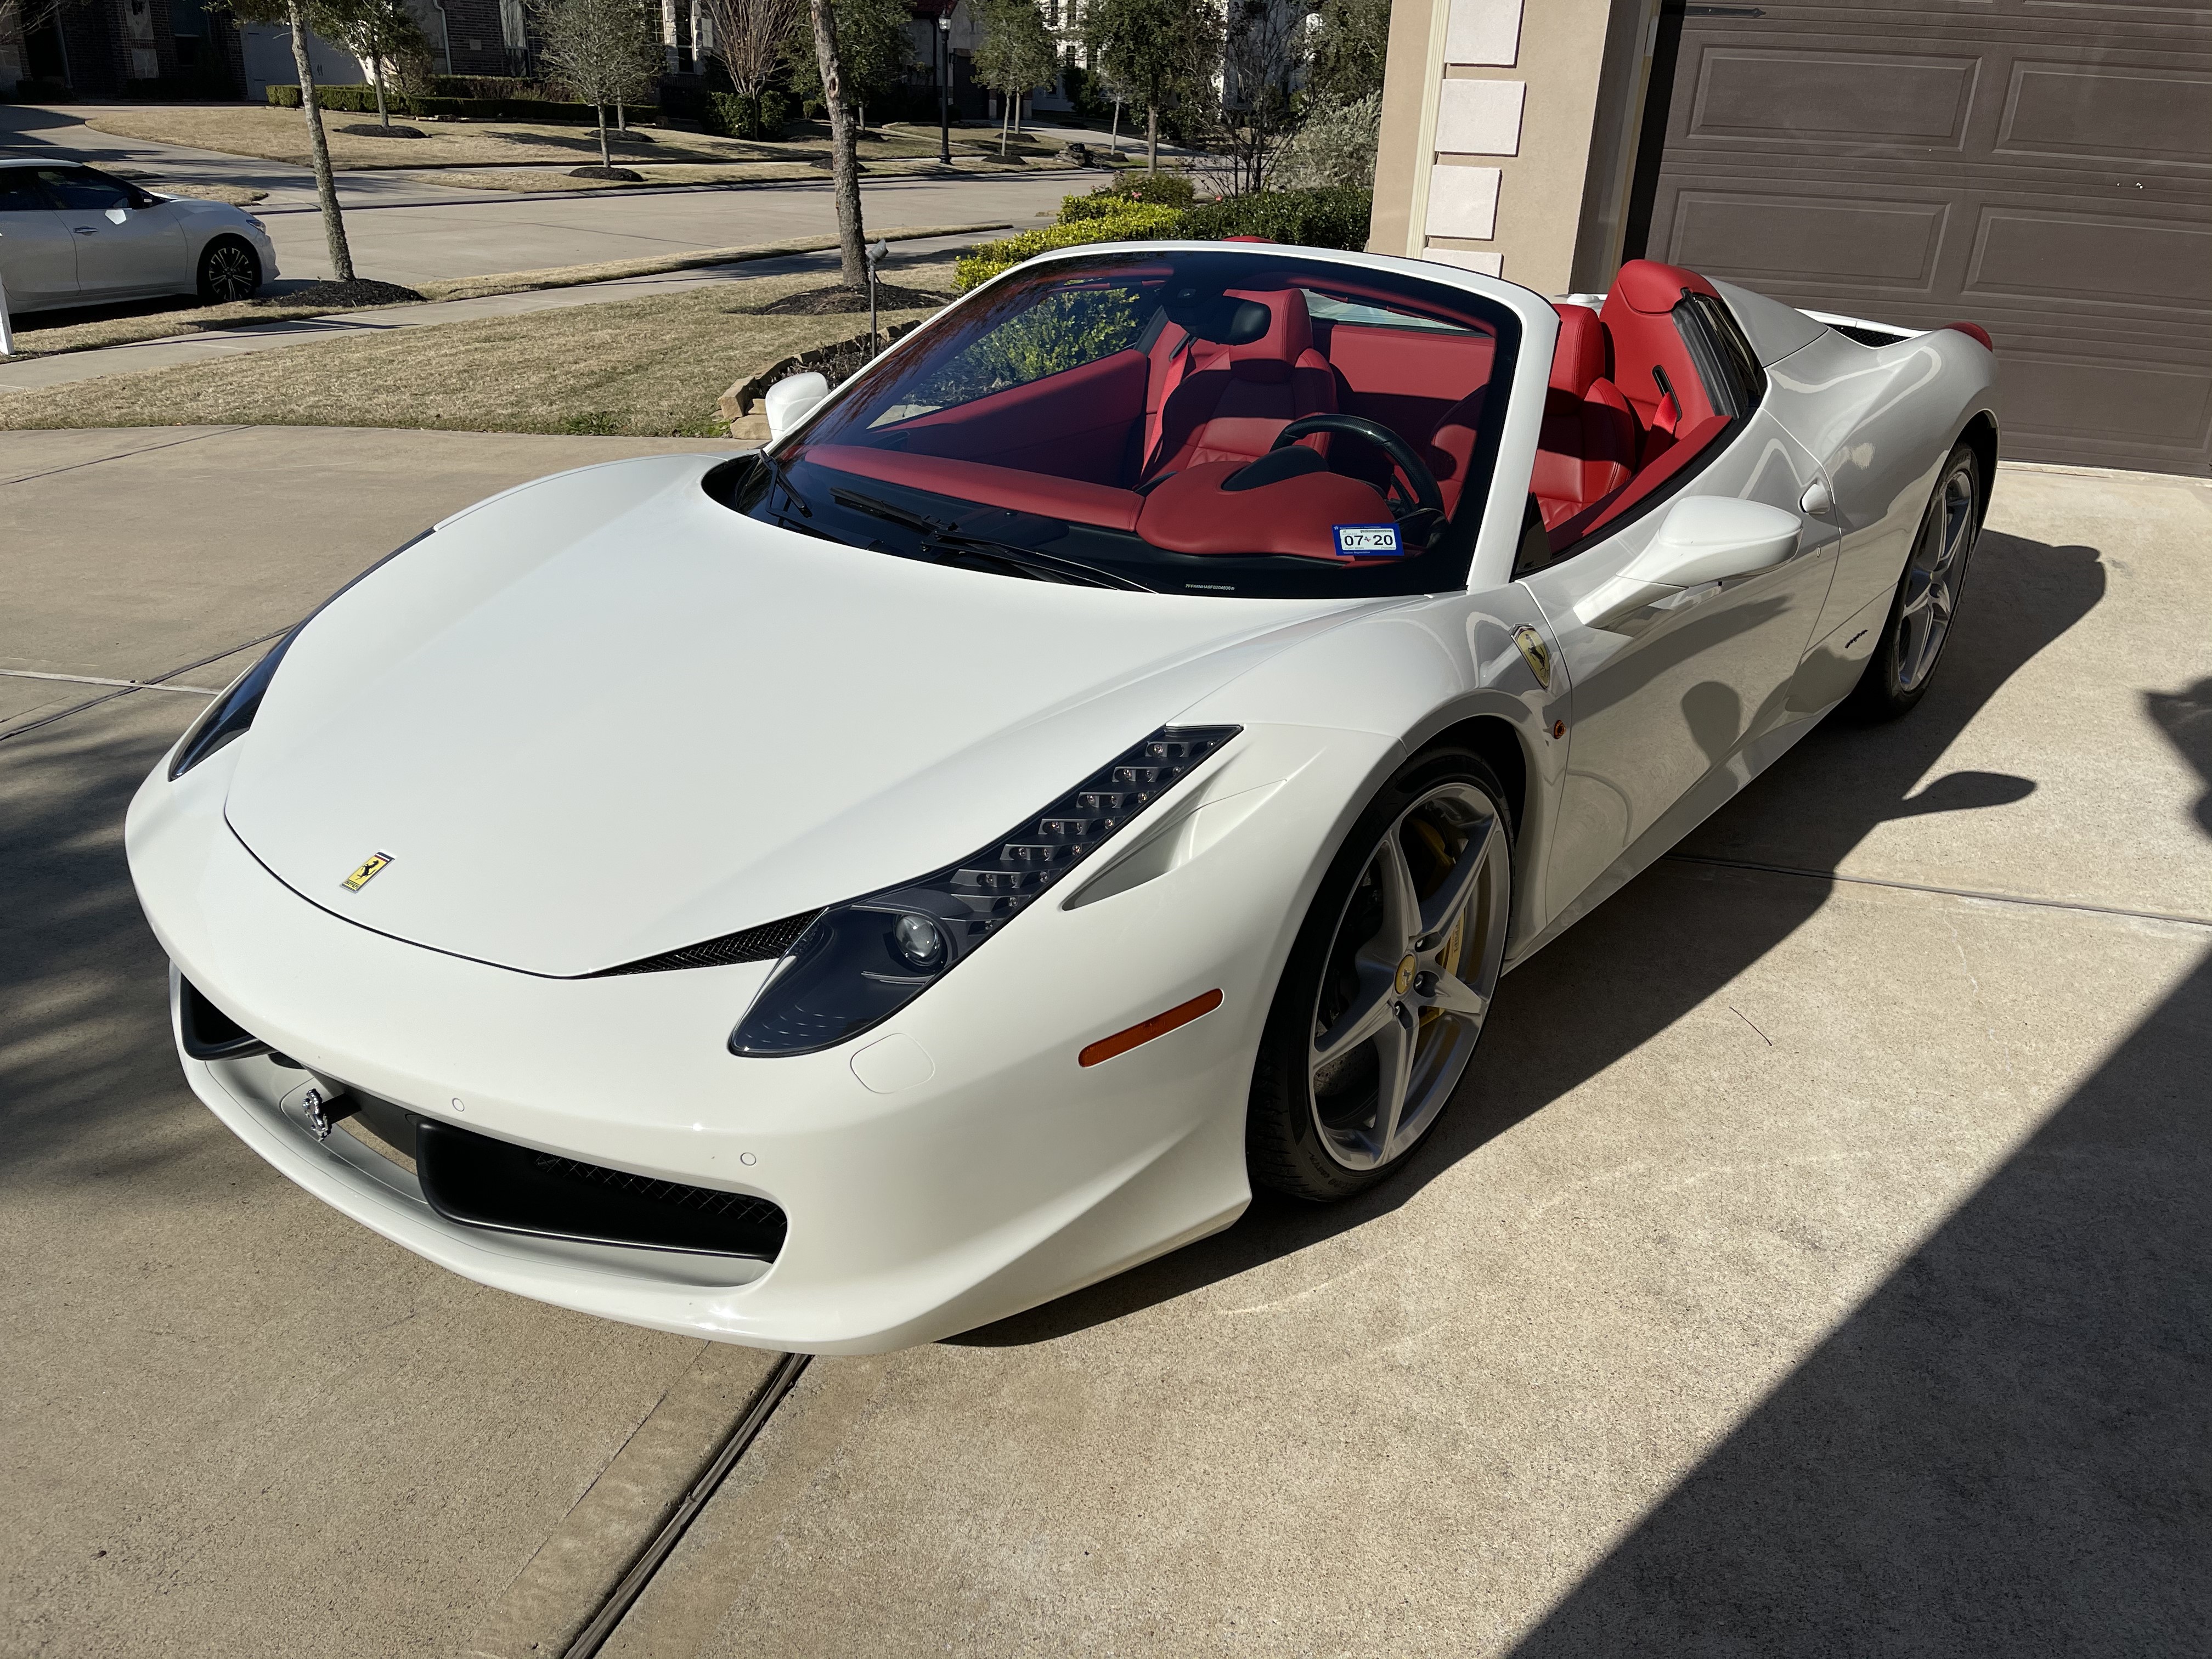 Sale - 2015 Ferrari 458 Spider | FerrariChat